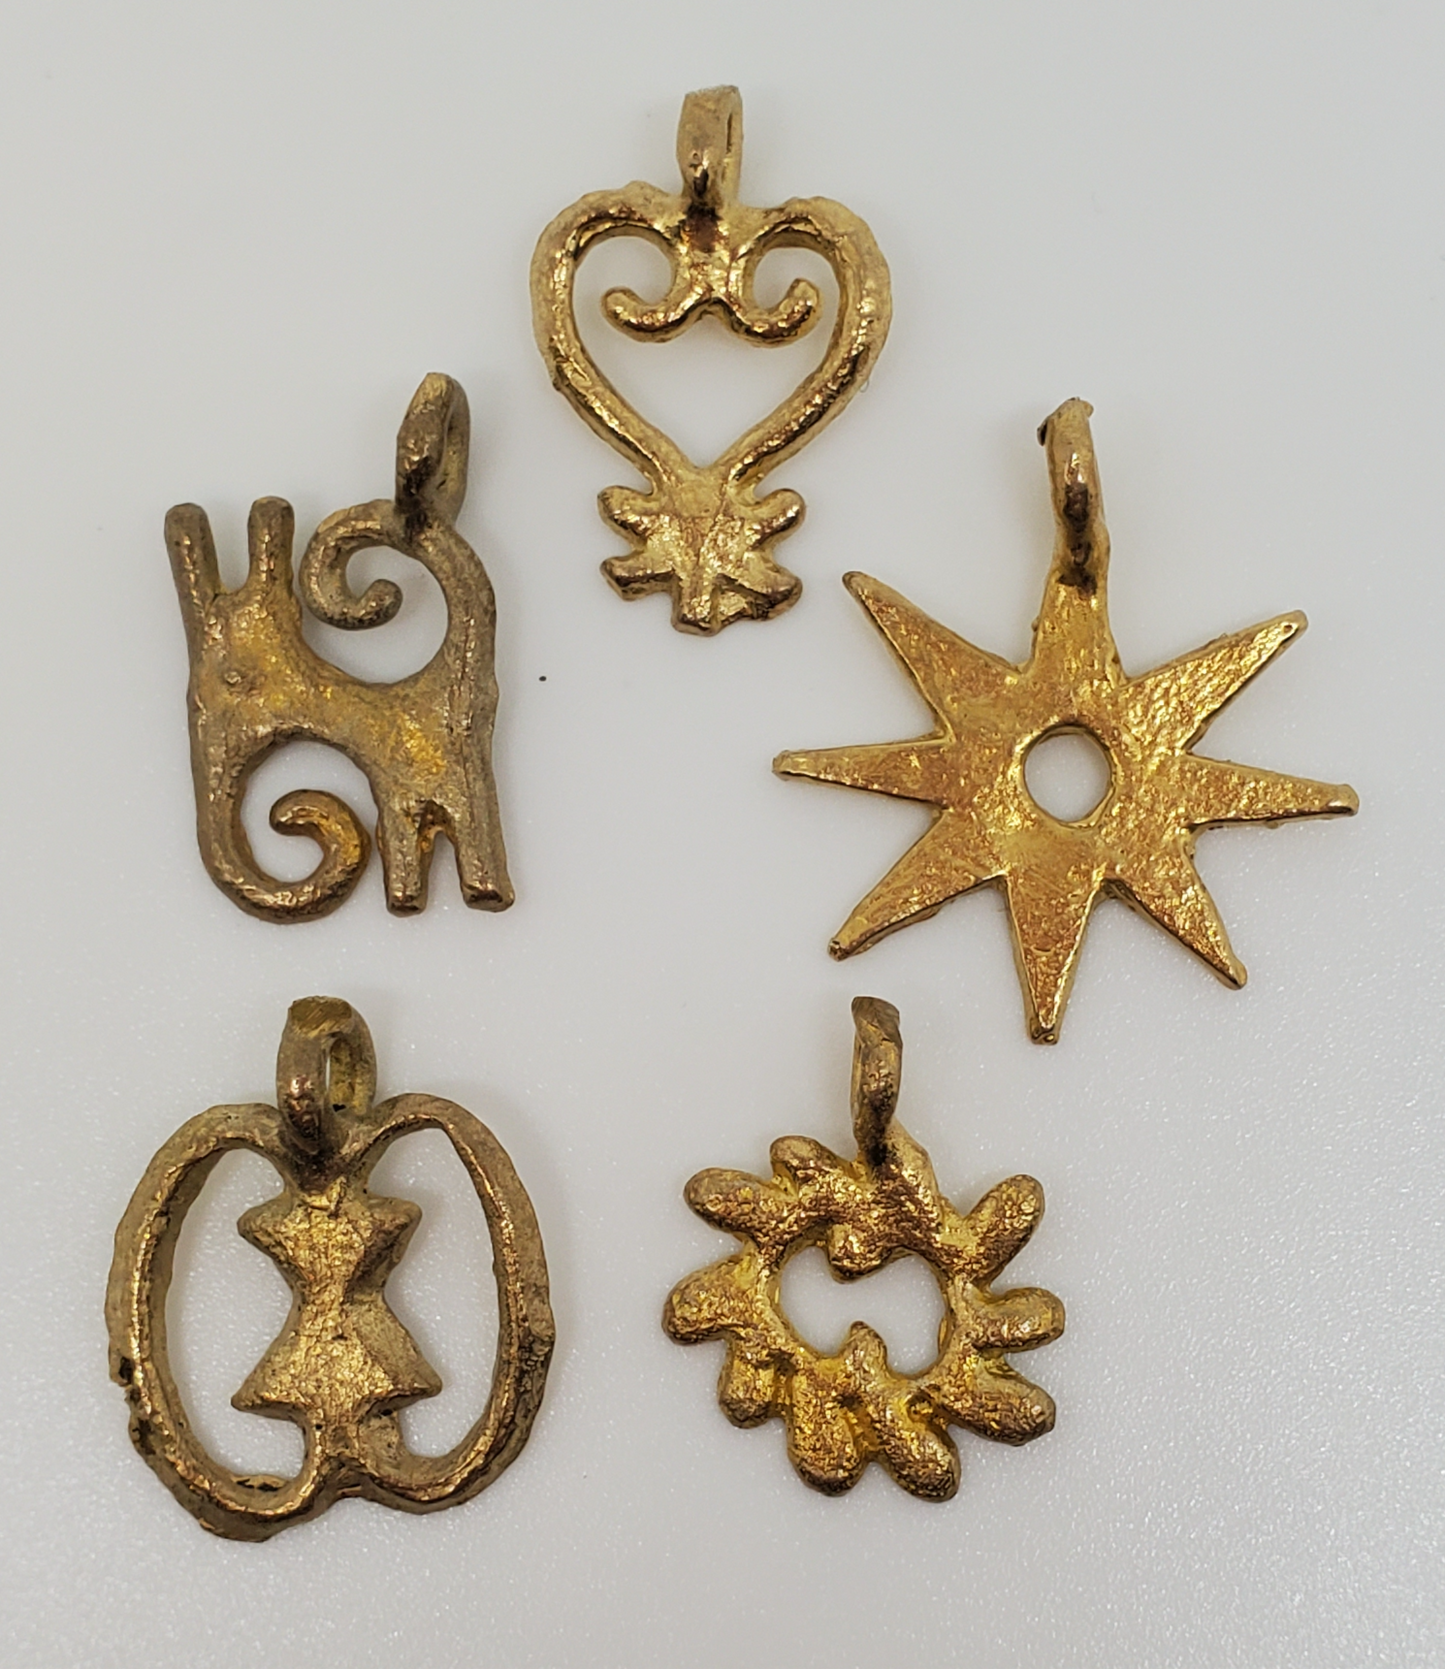 Brass Adinkra symbol charm